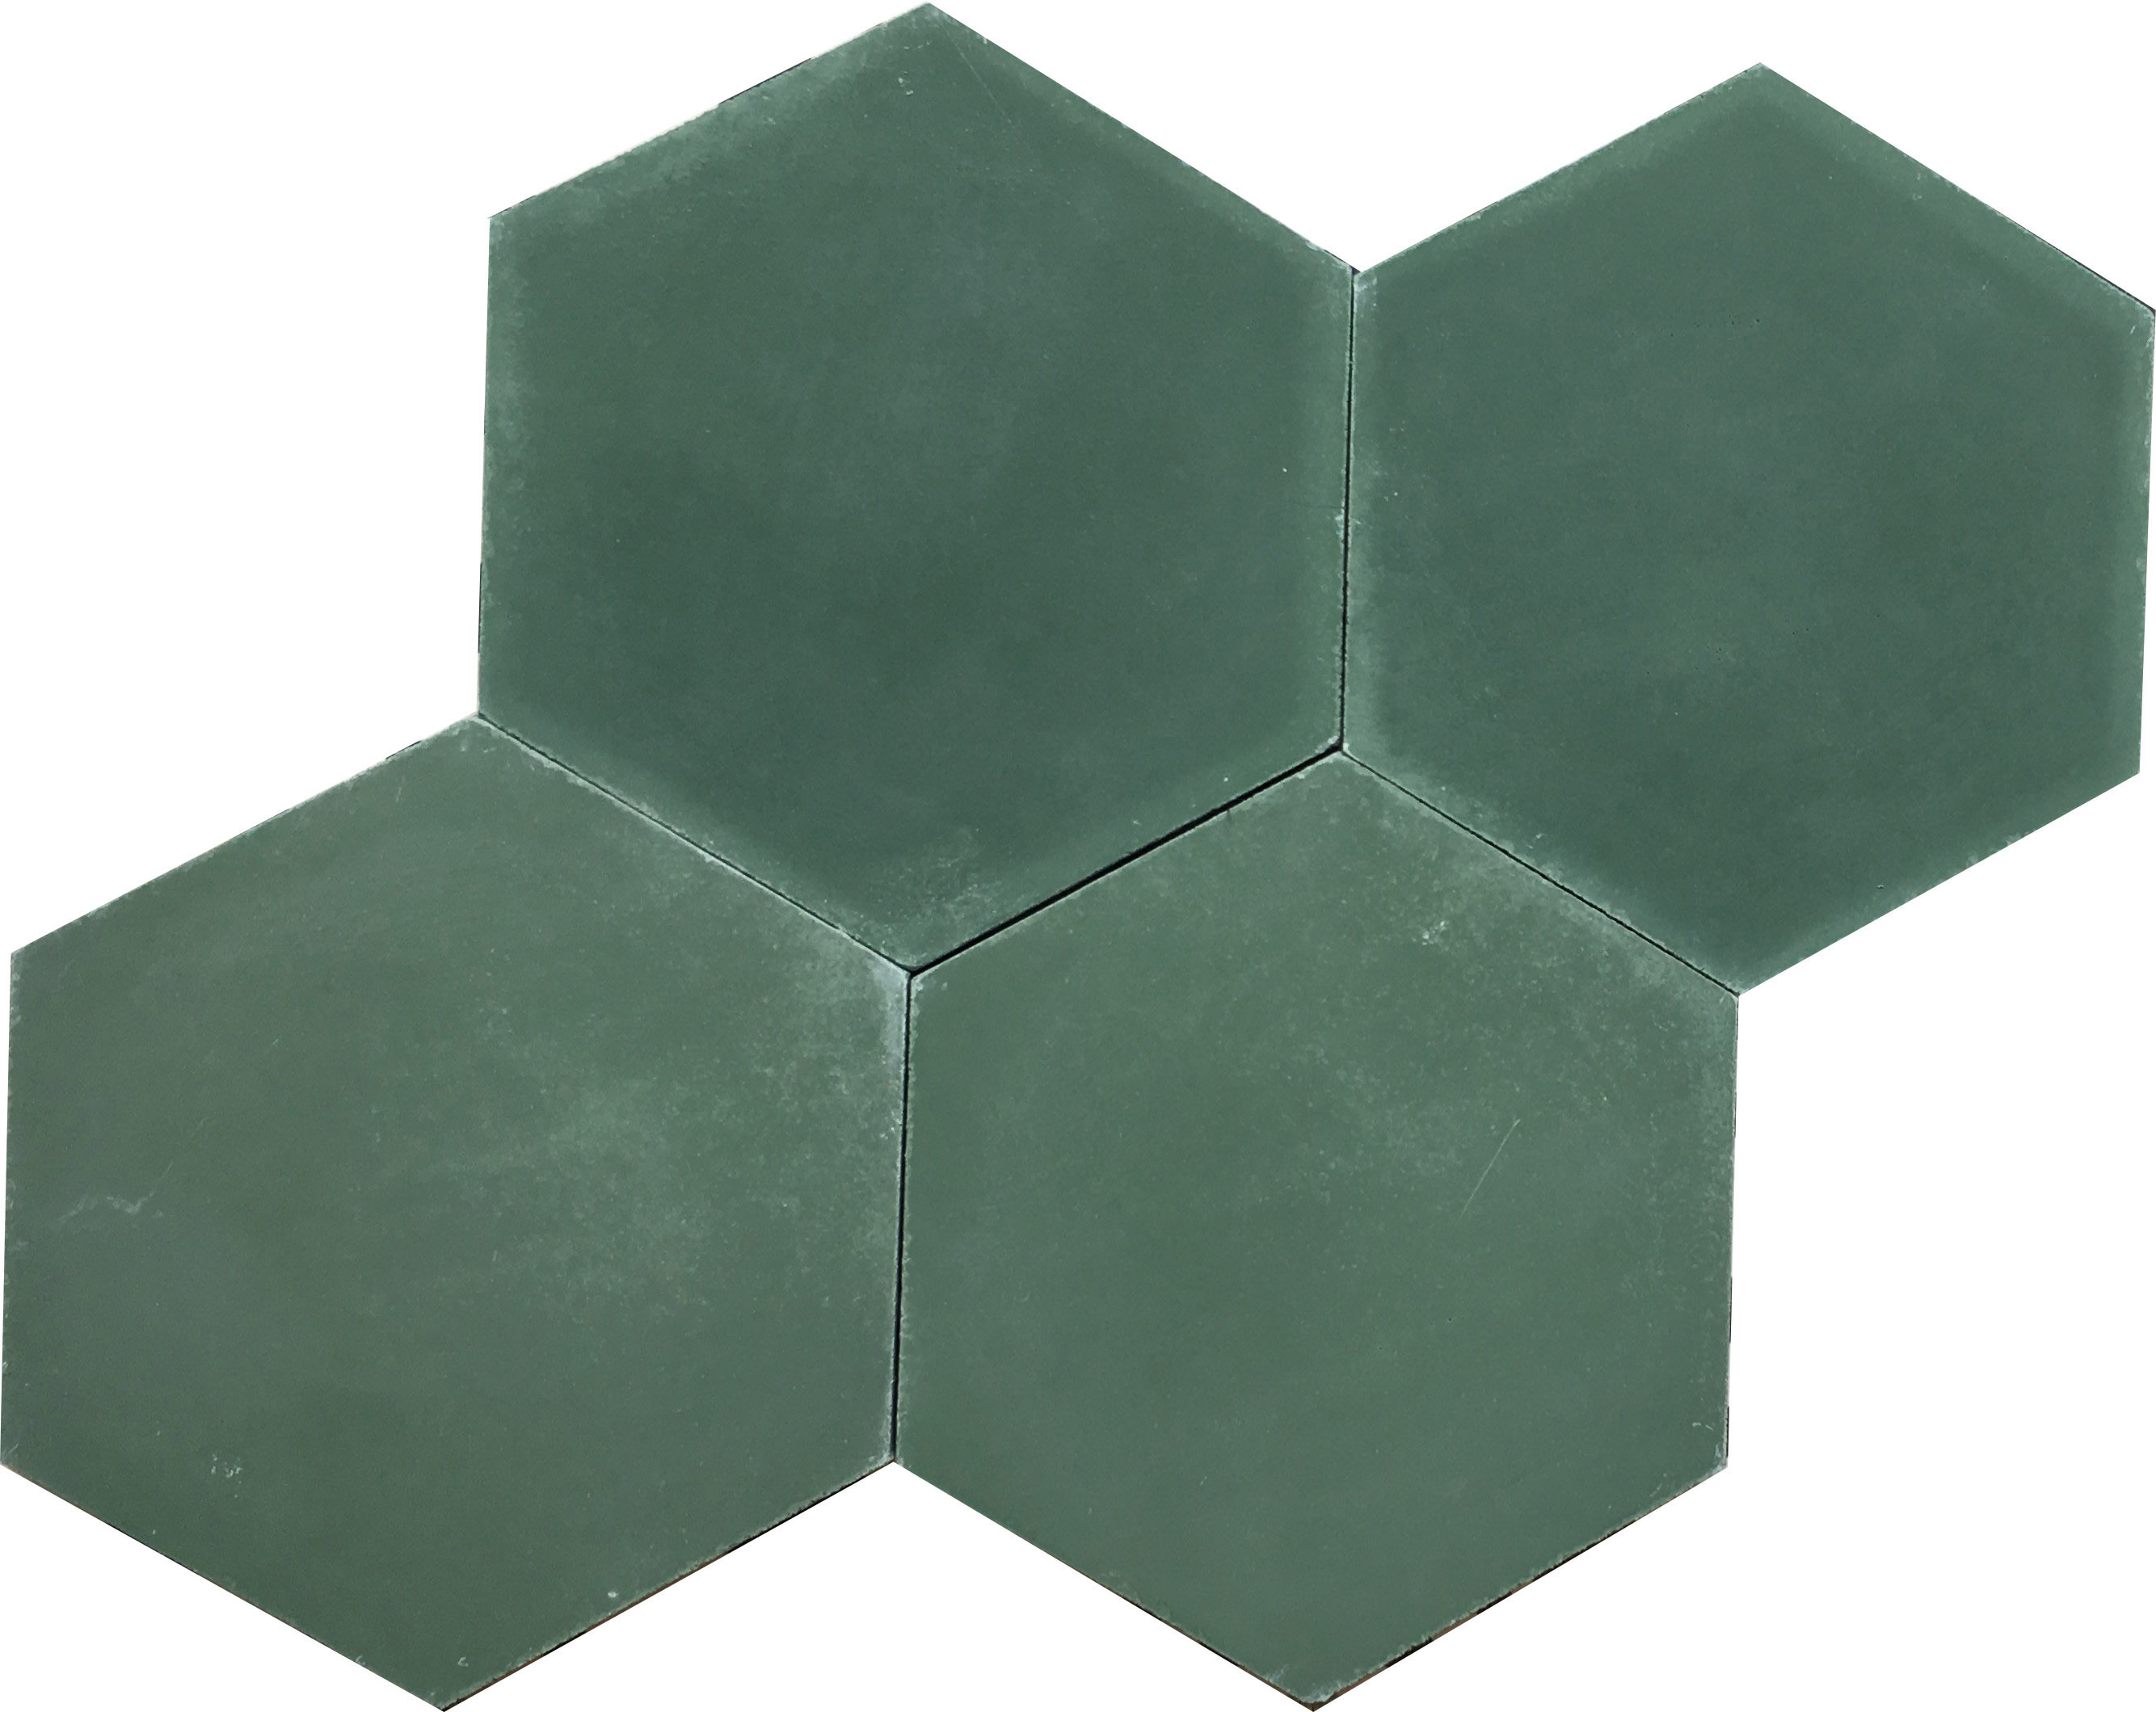 09 Forest Green - Hexagonal Solid Colour Encaustic Cement Tiles